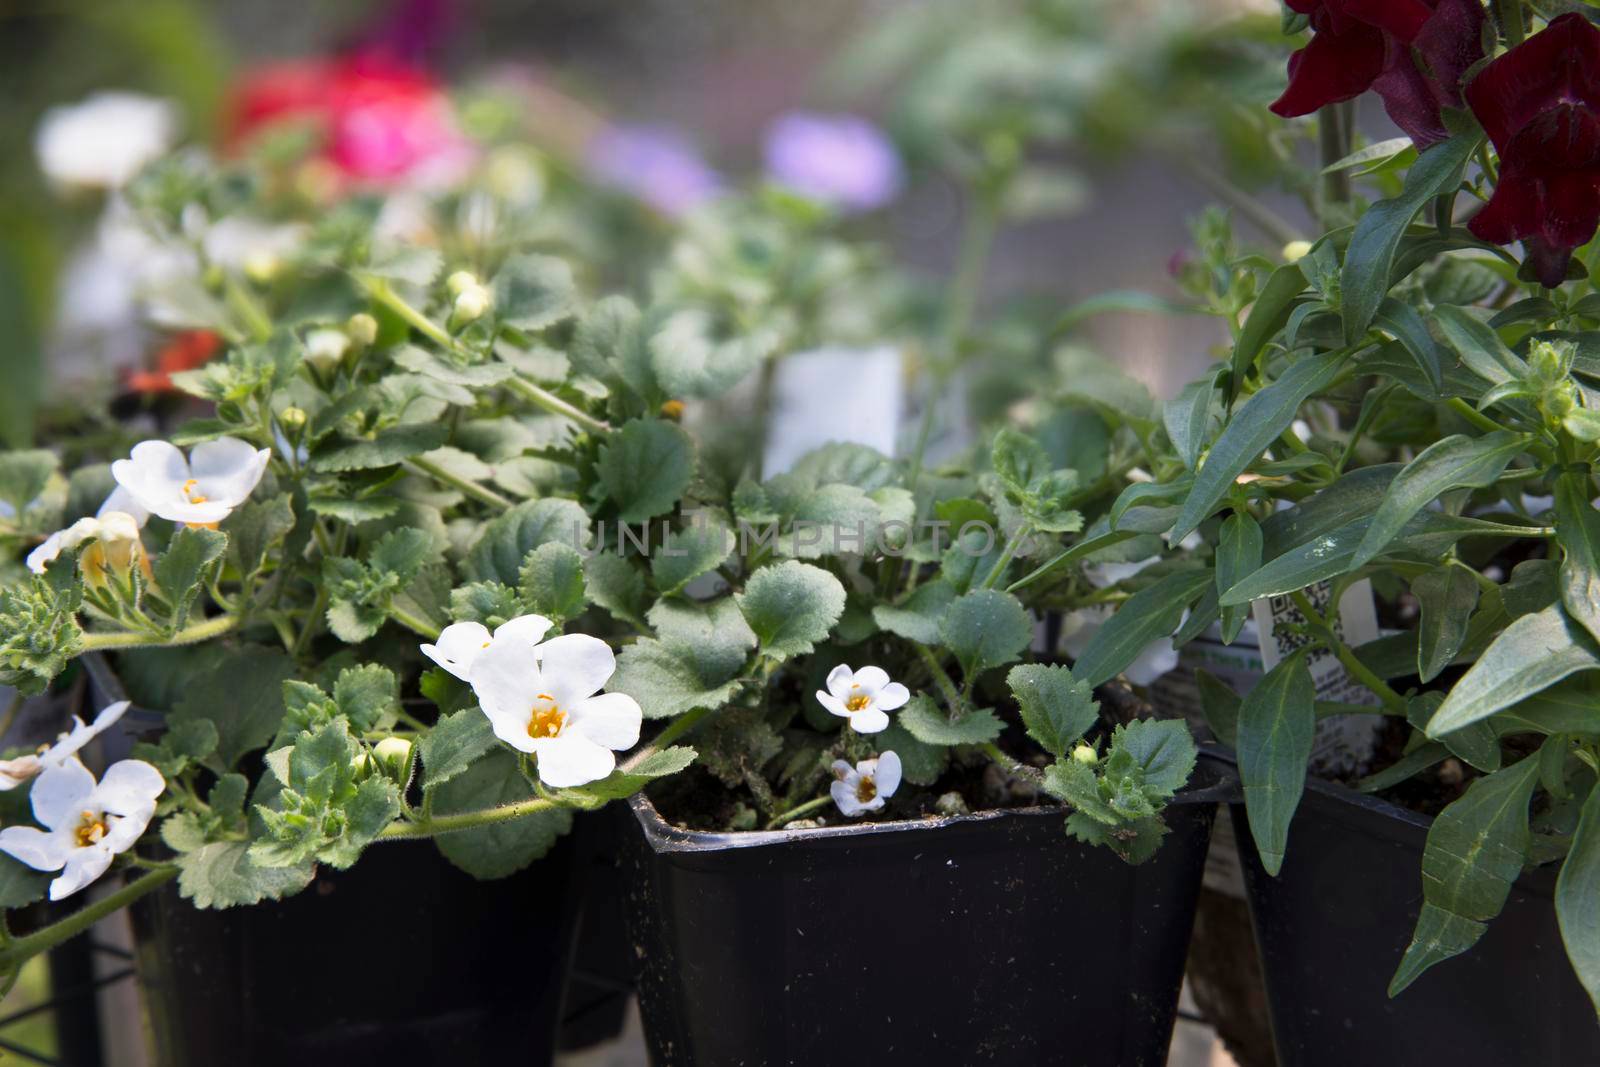 Bacopa flowers growing in plastic pots in greenhouse.